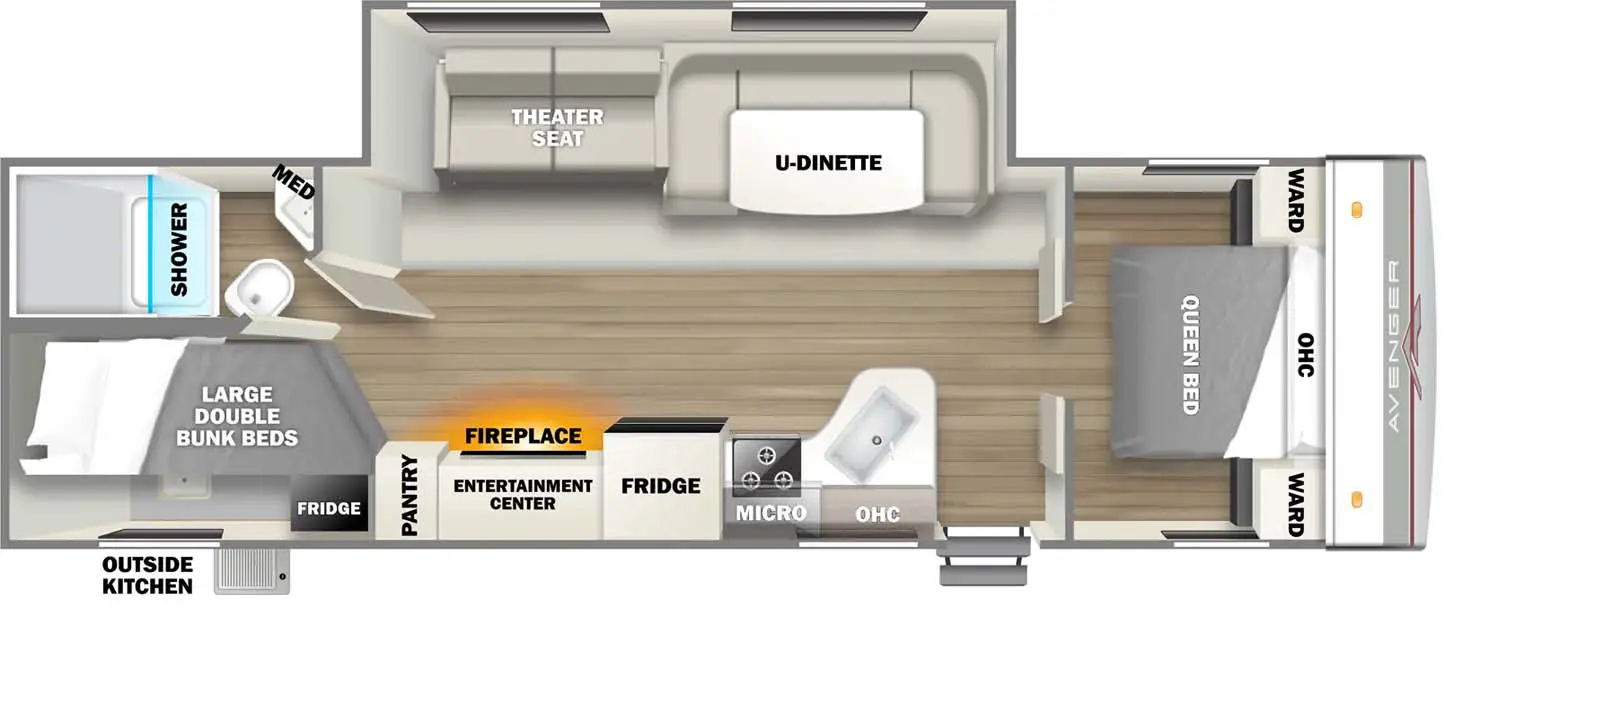 27DBS Floorplan Image